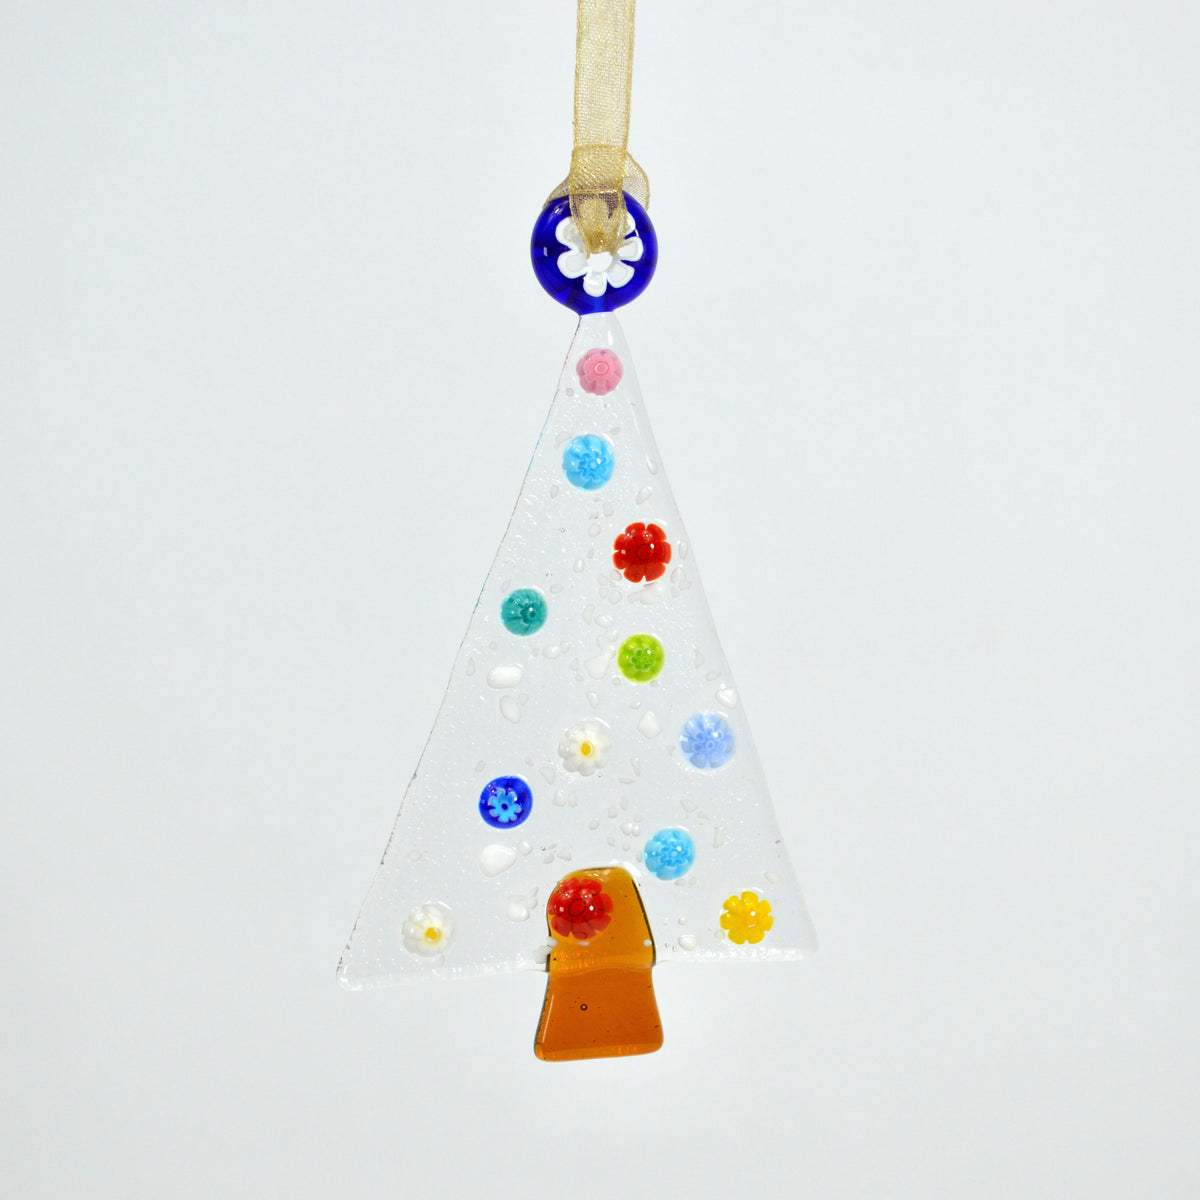 Murano Glass Christmas Tree Ornament with Millefiori Mosaics, Made in Italy - My Italian Decor